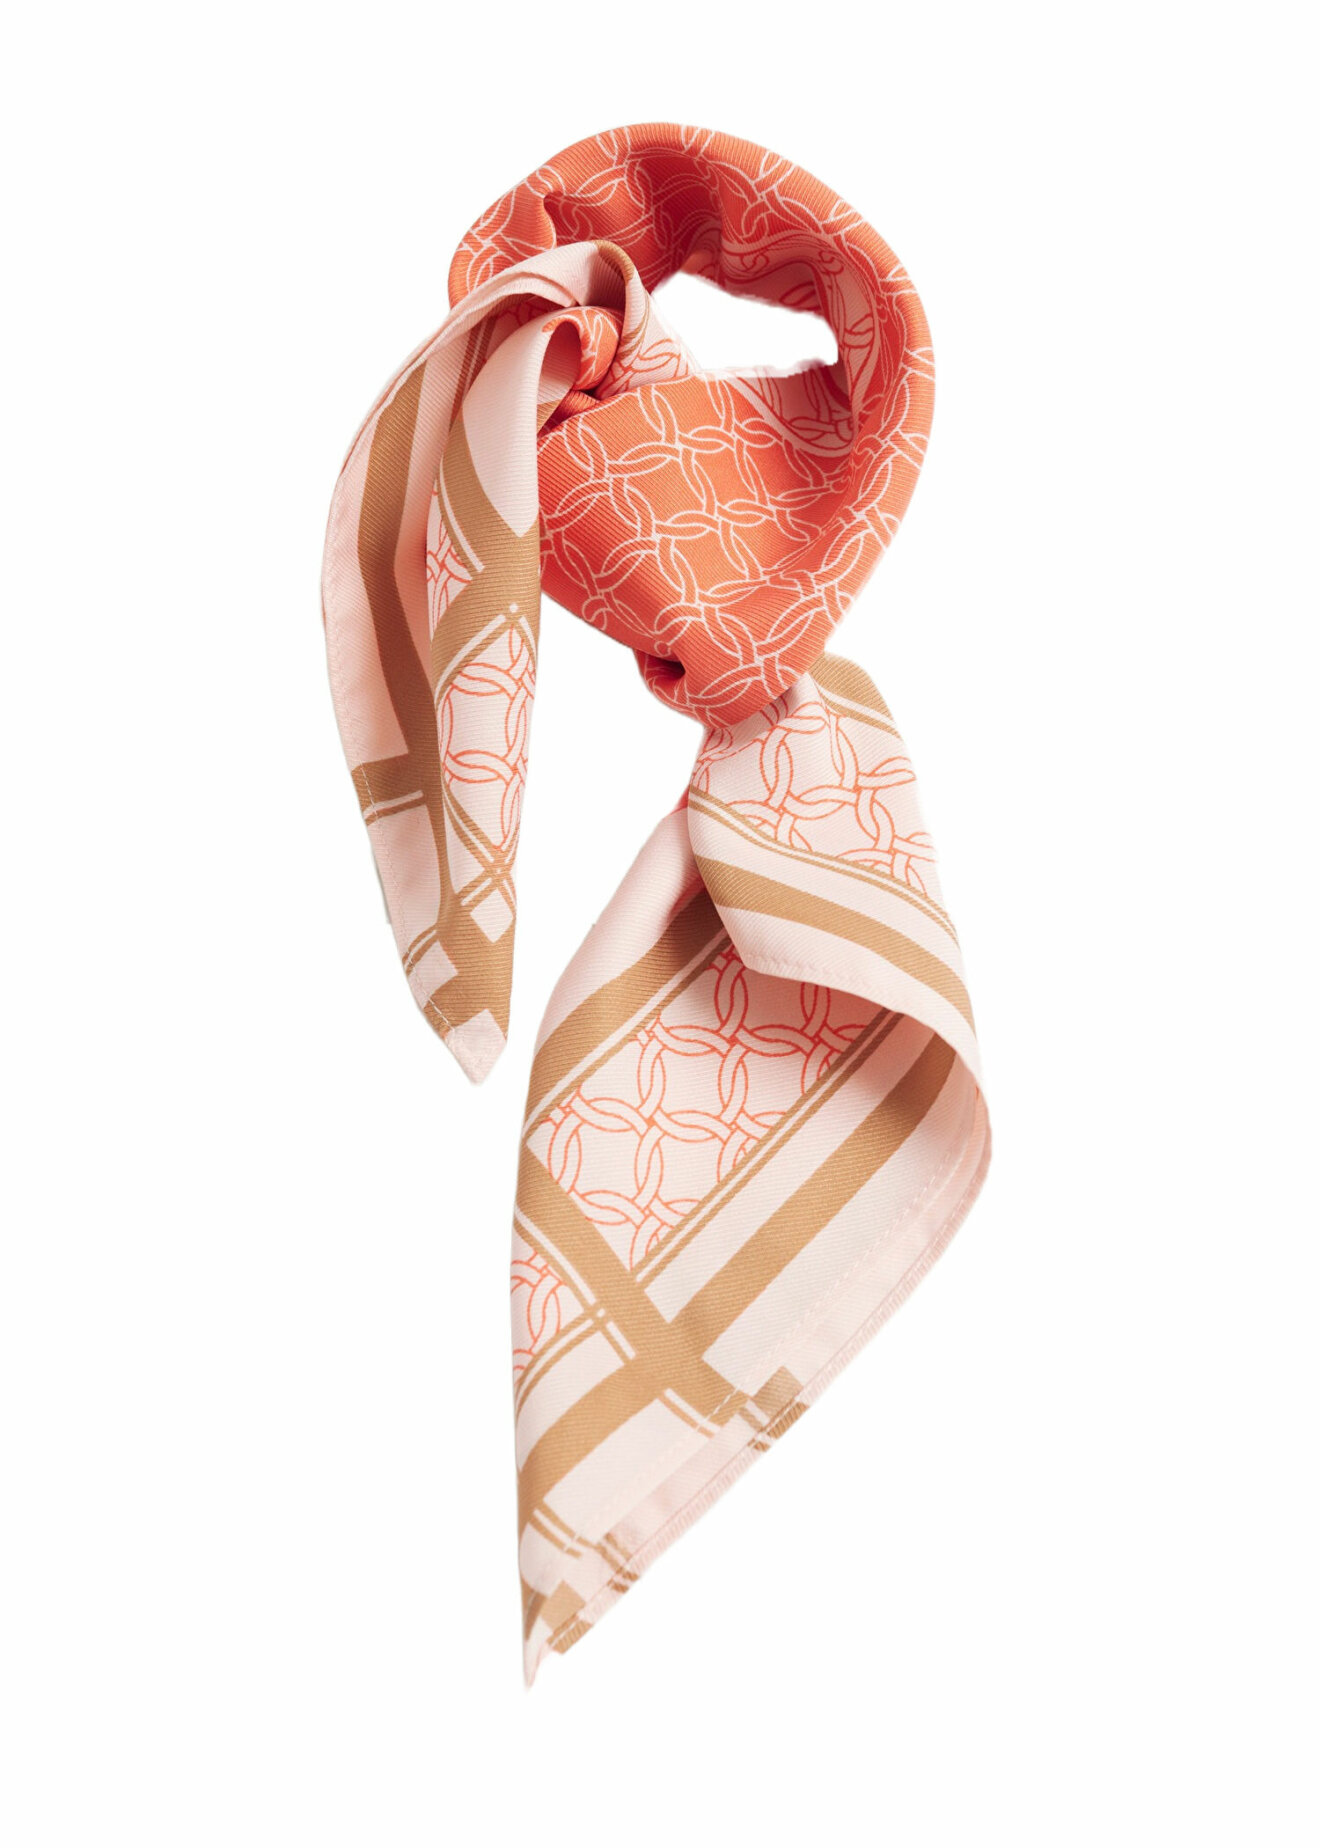 mönstrad scarf i rosa toner